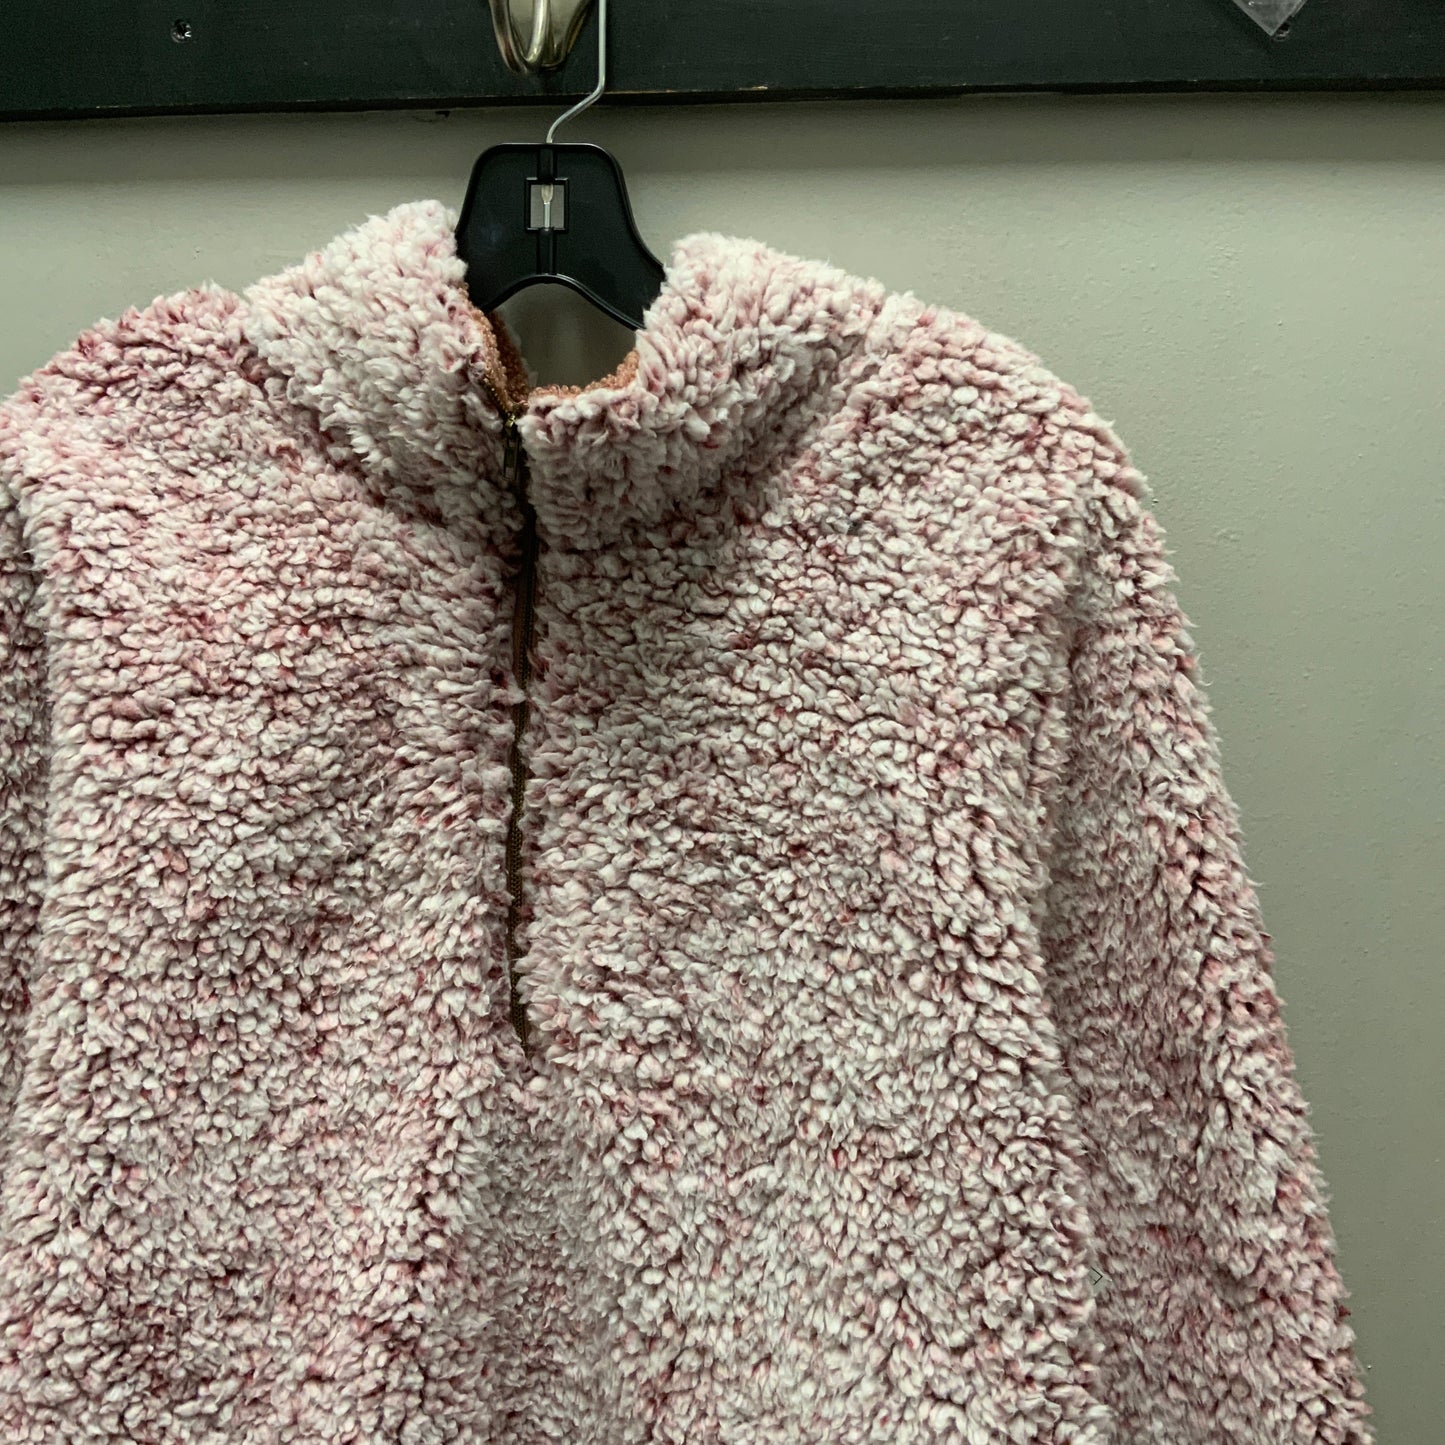 Top Long Sleeve Fleece Pullover By Entro  Size: 1x